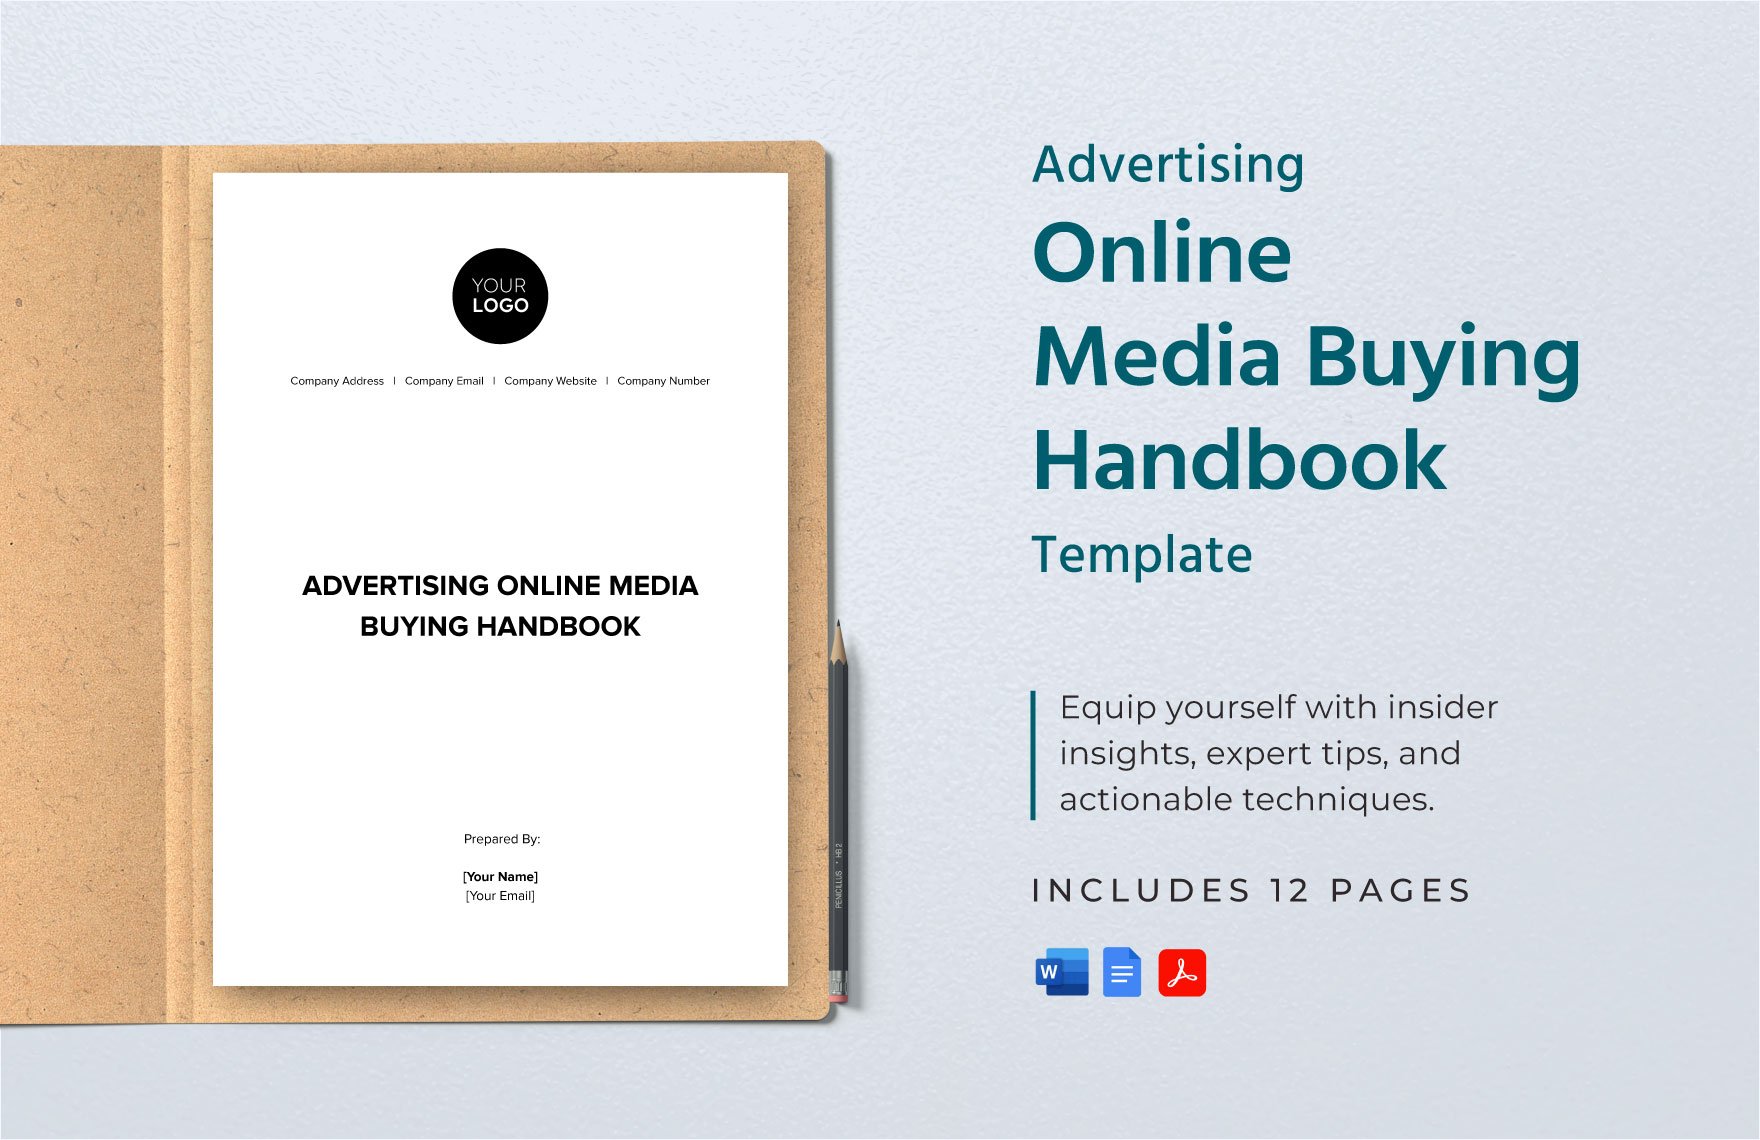 Advertising Online Media Buying Handbook Template in Word, Google Docs, PDF